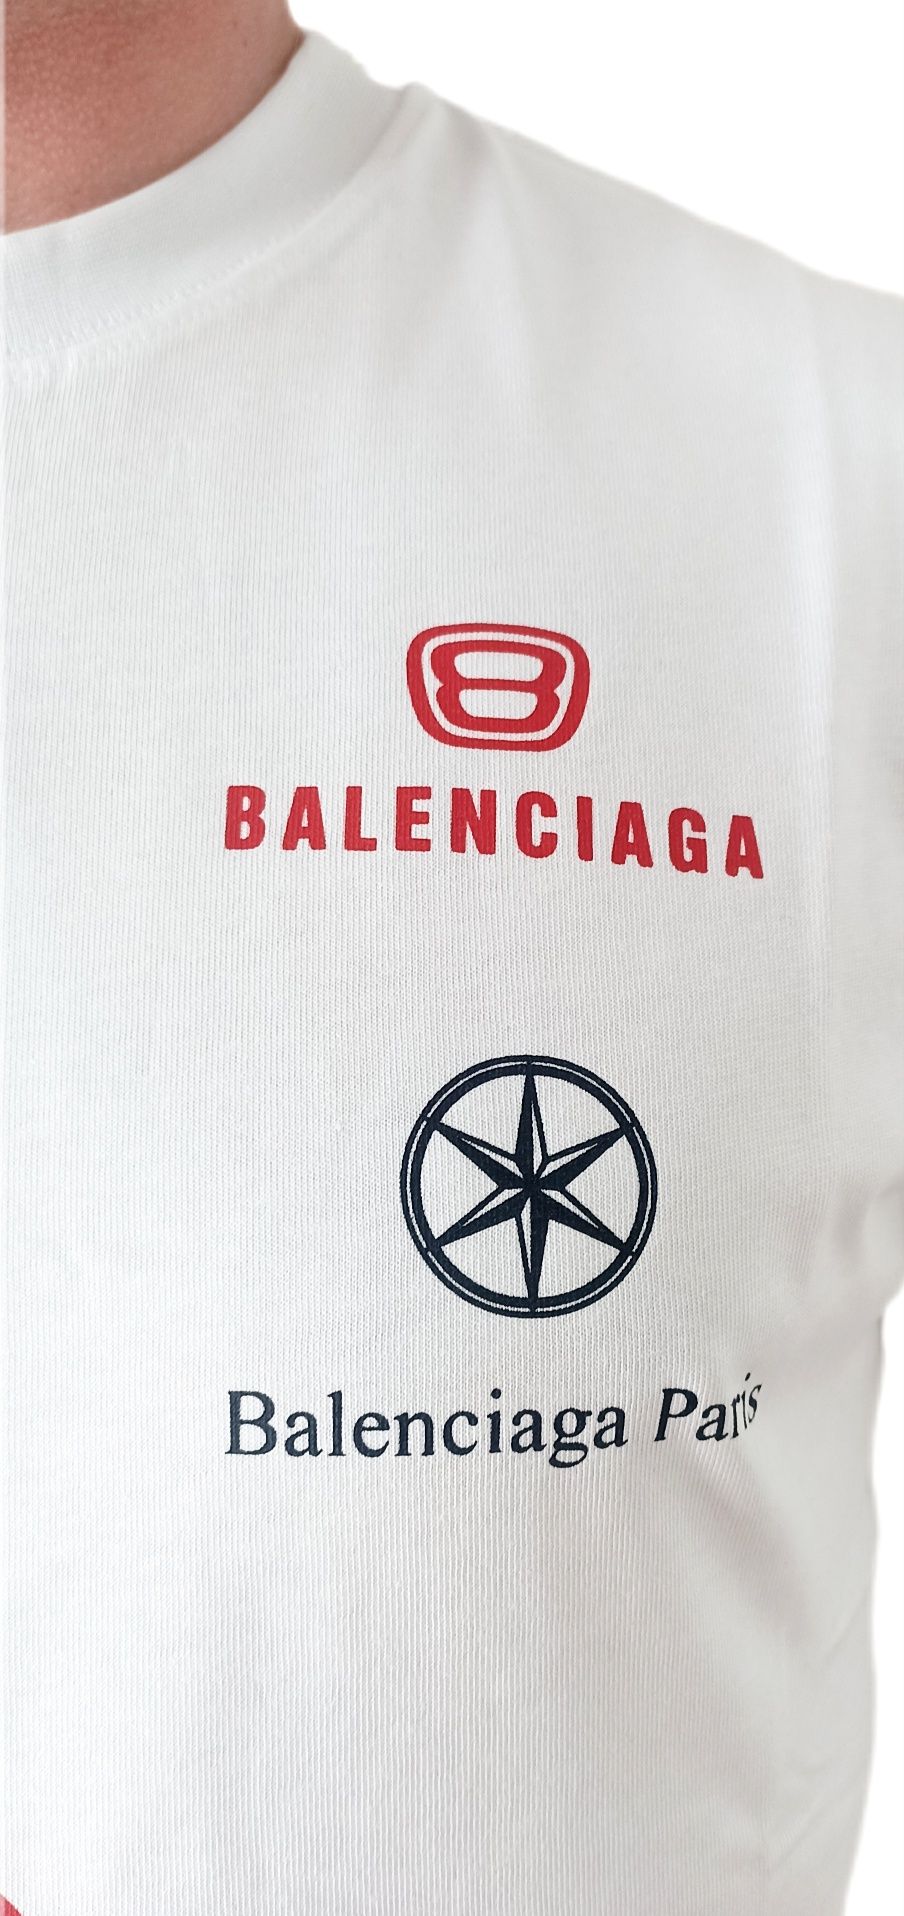 Balenciaga t-shirt koszulka r.S,M,L,XL,XXL